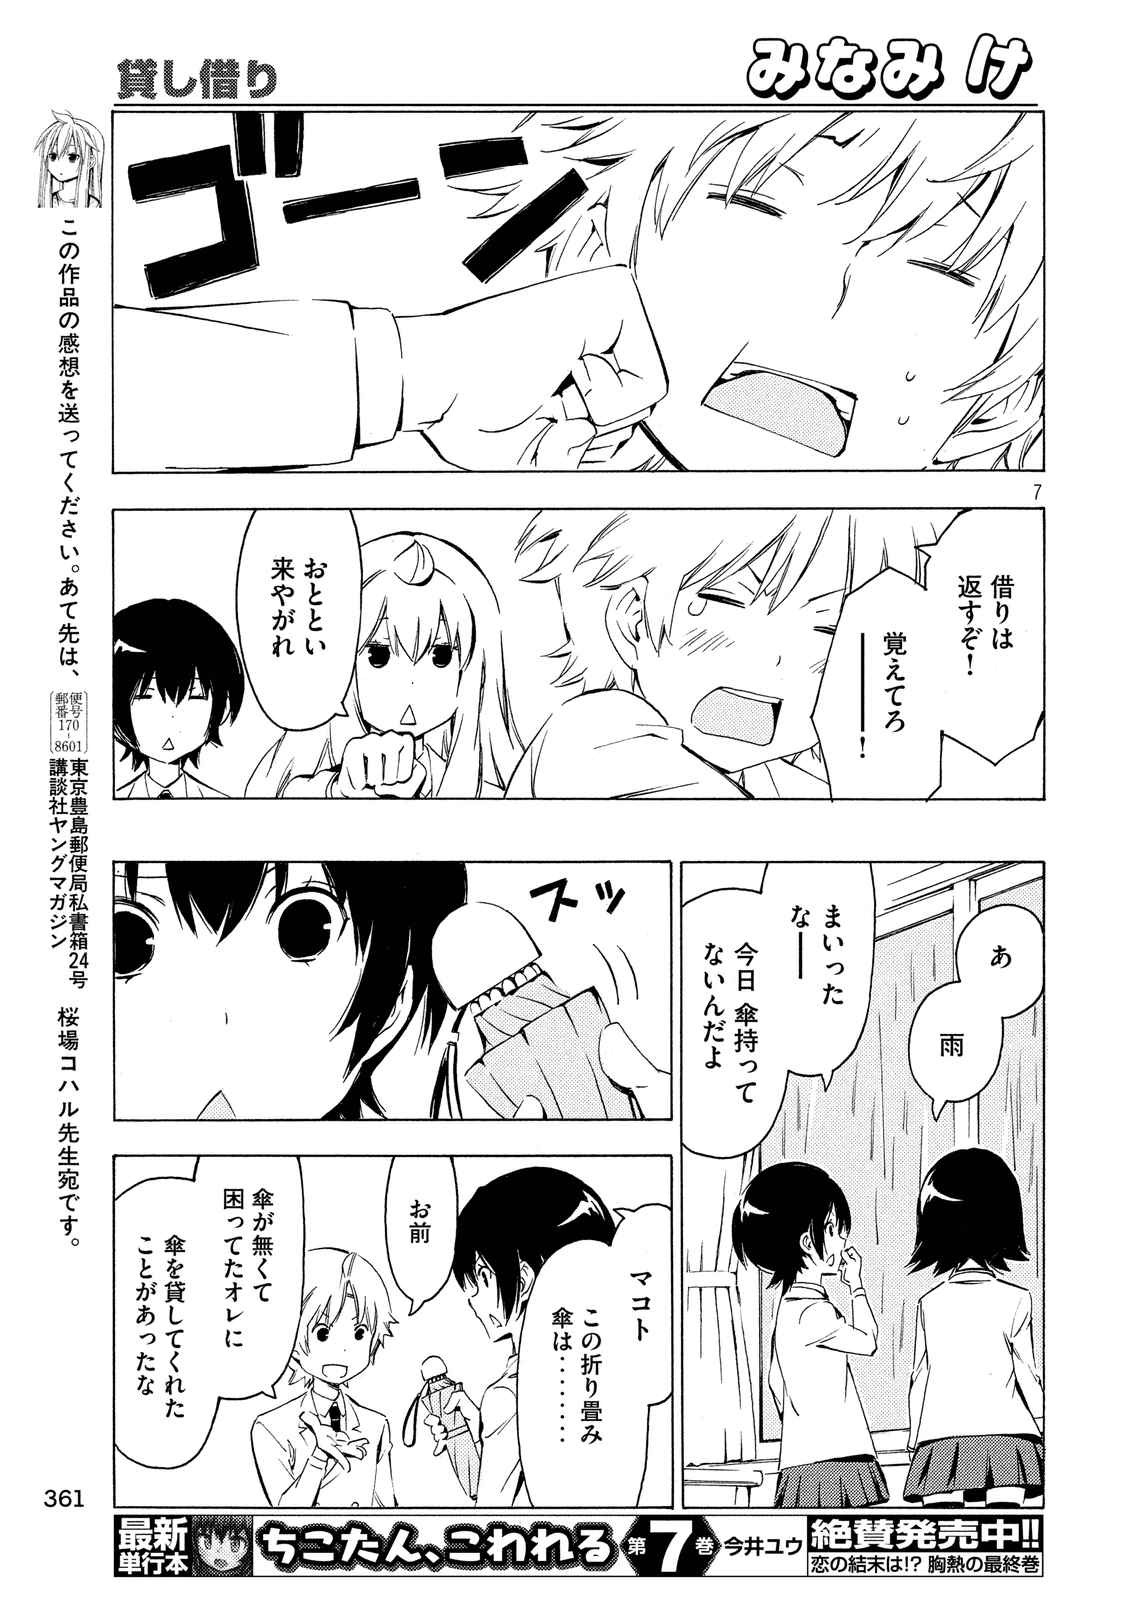 Minami-ke - Chapter 310 - Page 7